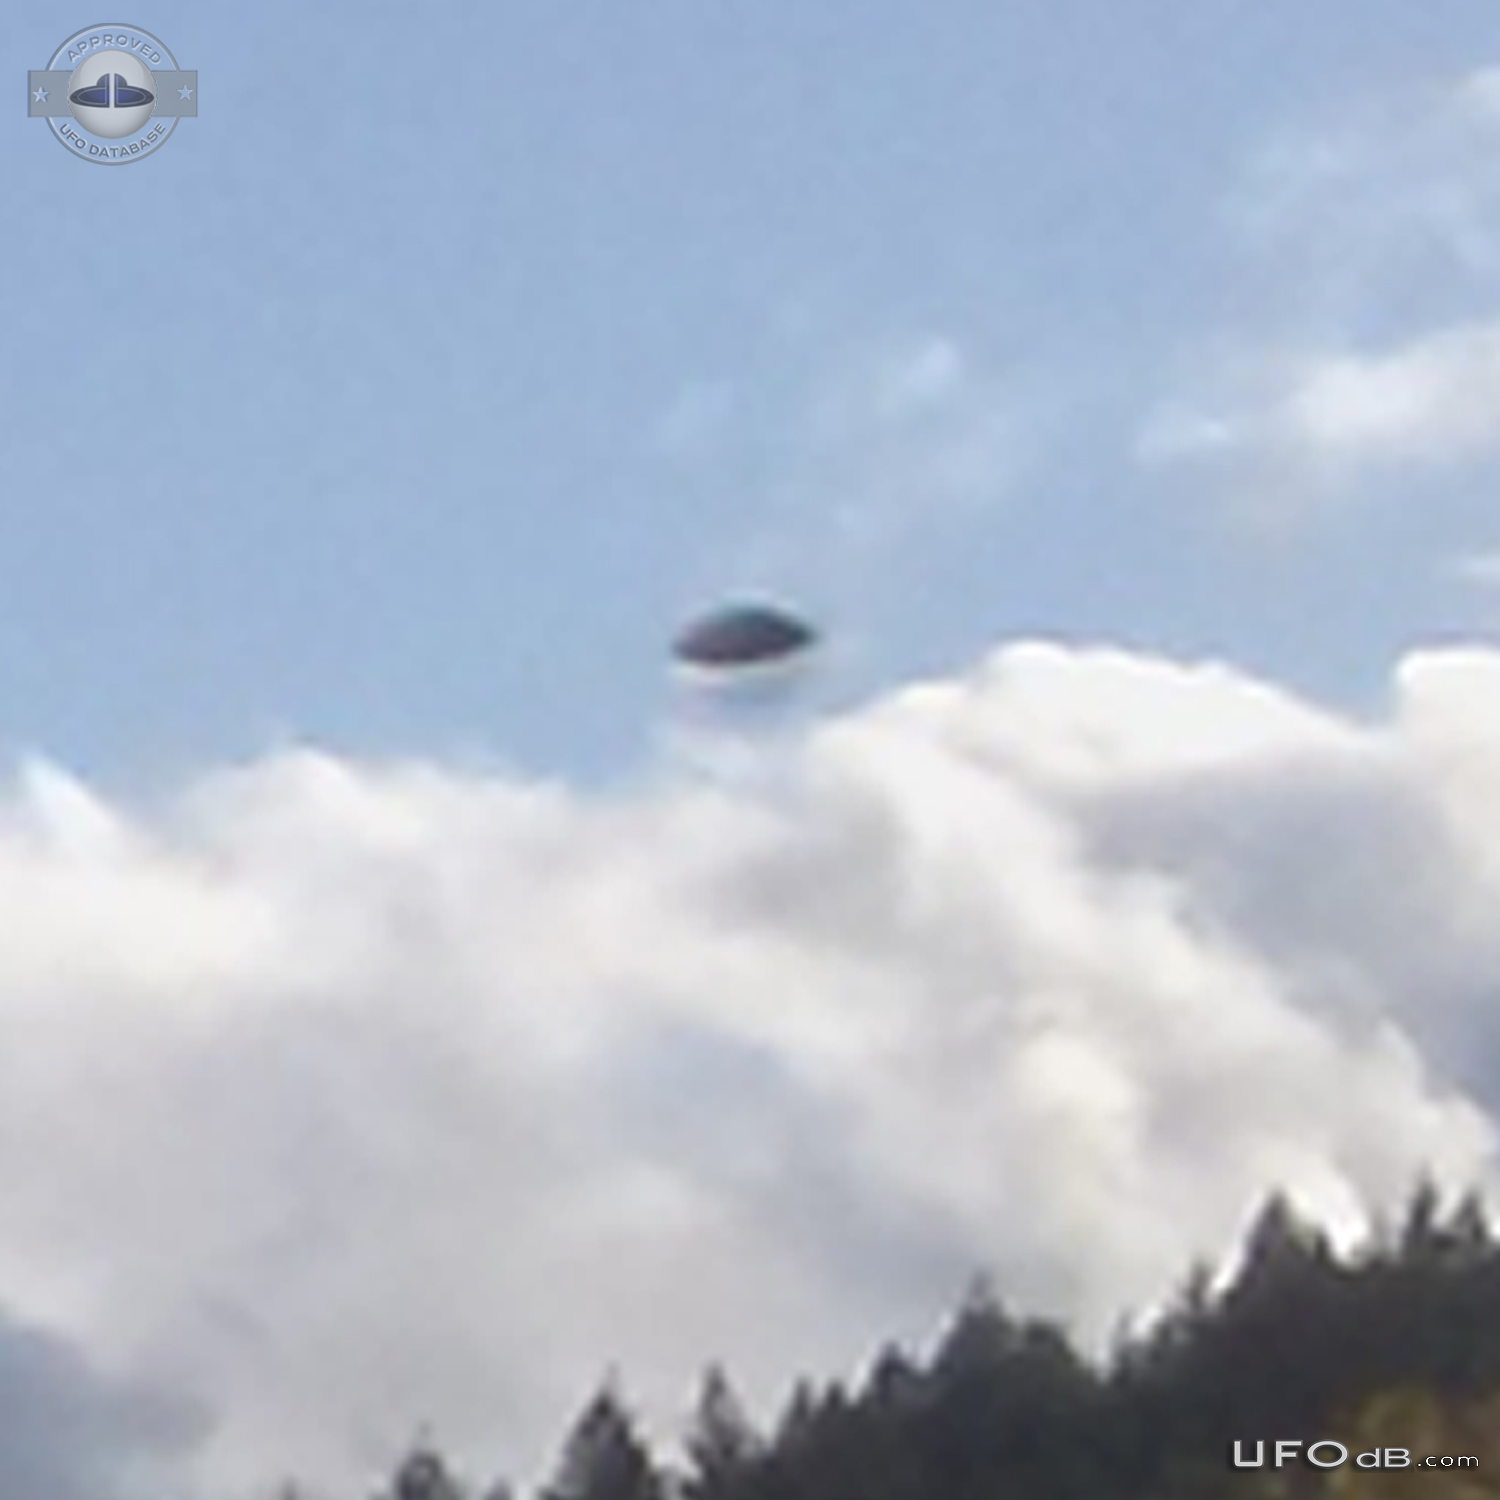 Photos near Grants Pass captured UFO on film - Merlin Oregon USA 2016 UFO Picture #807-5